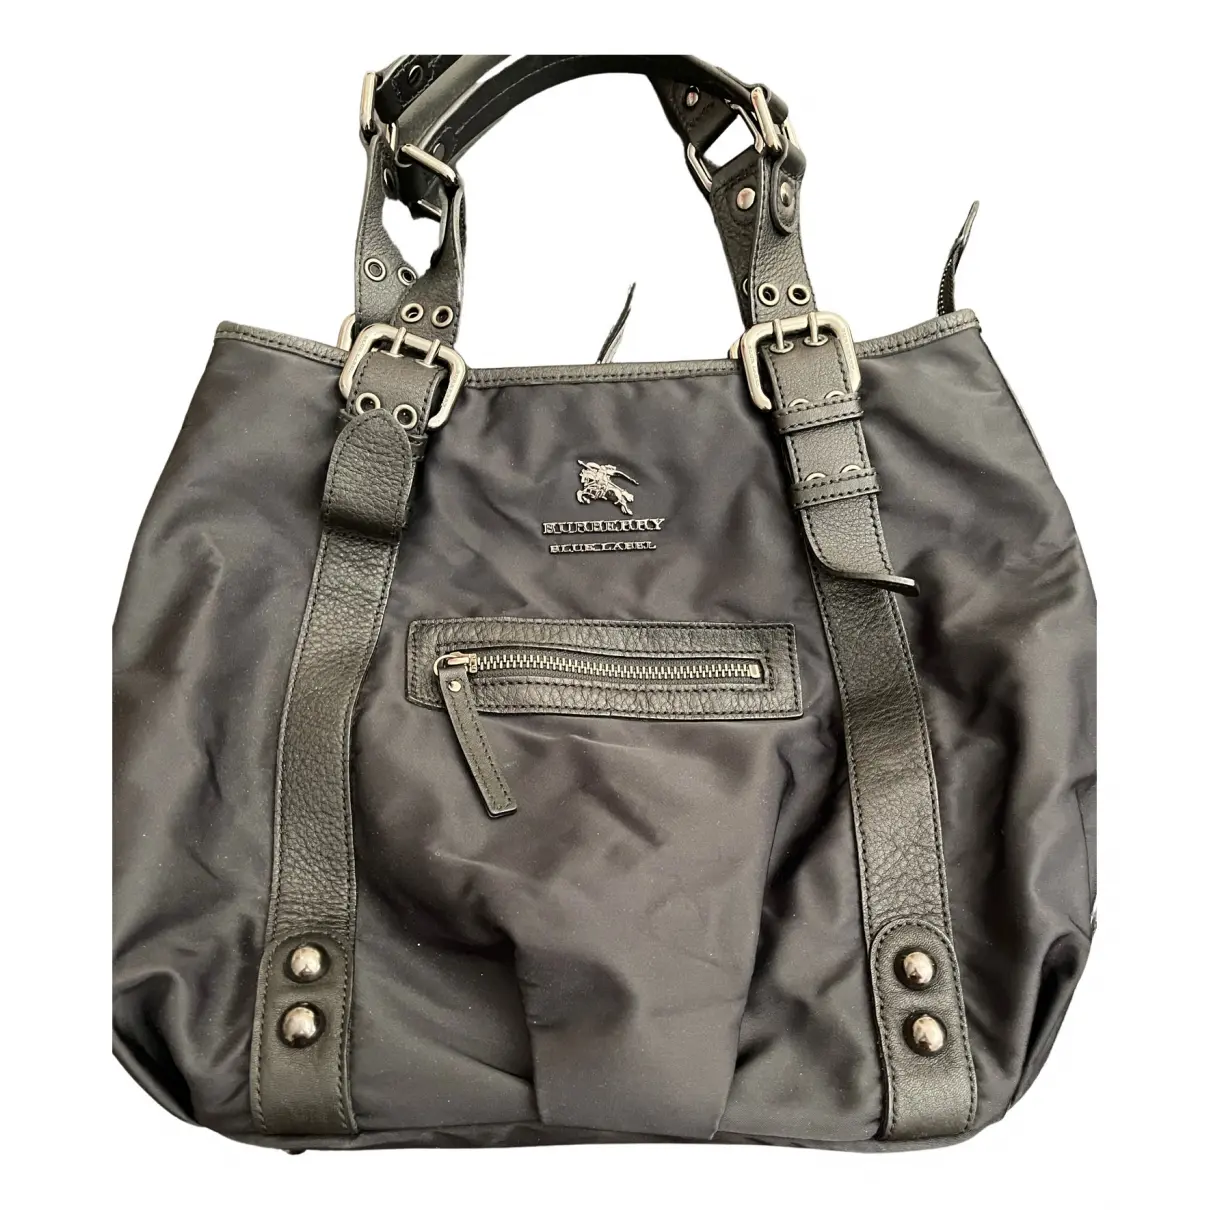 Woodbury leather handbag Burberry